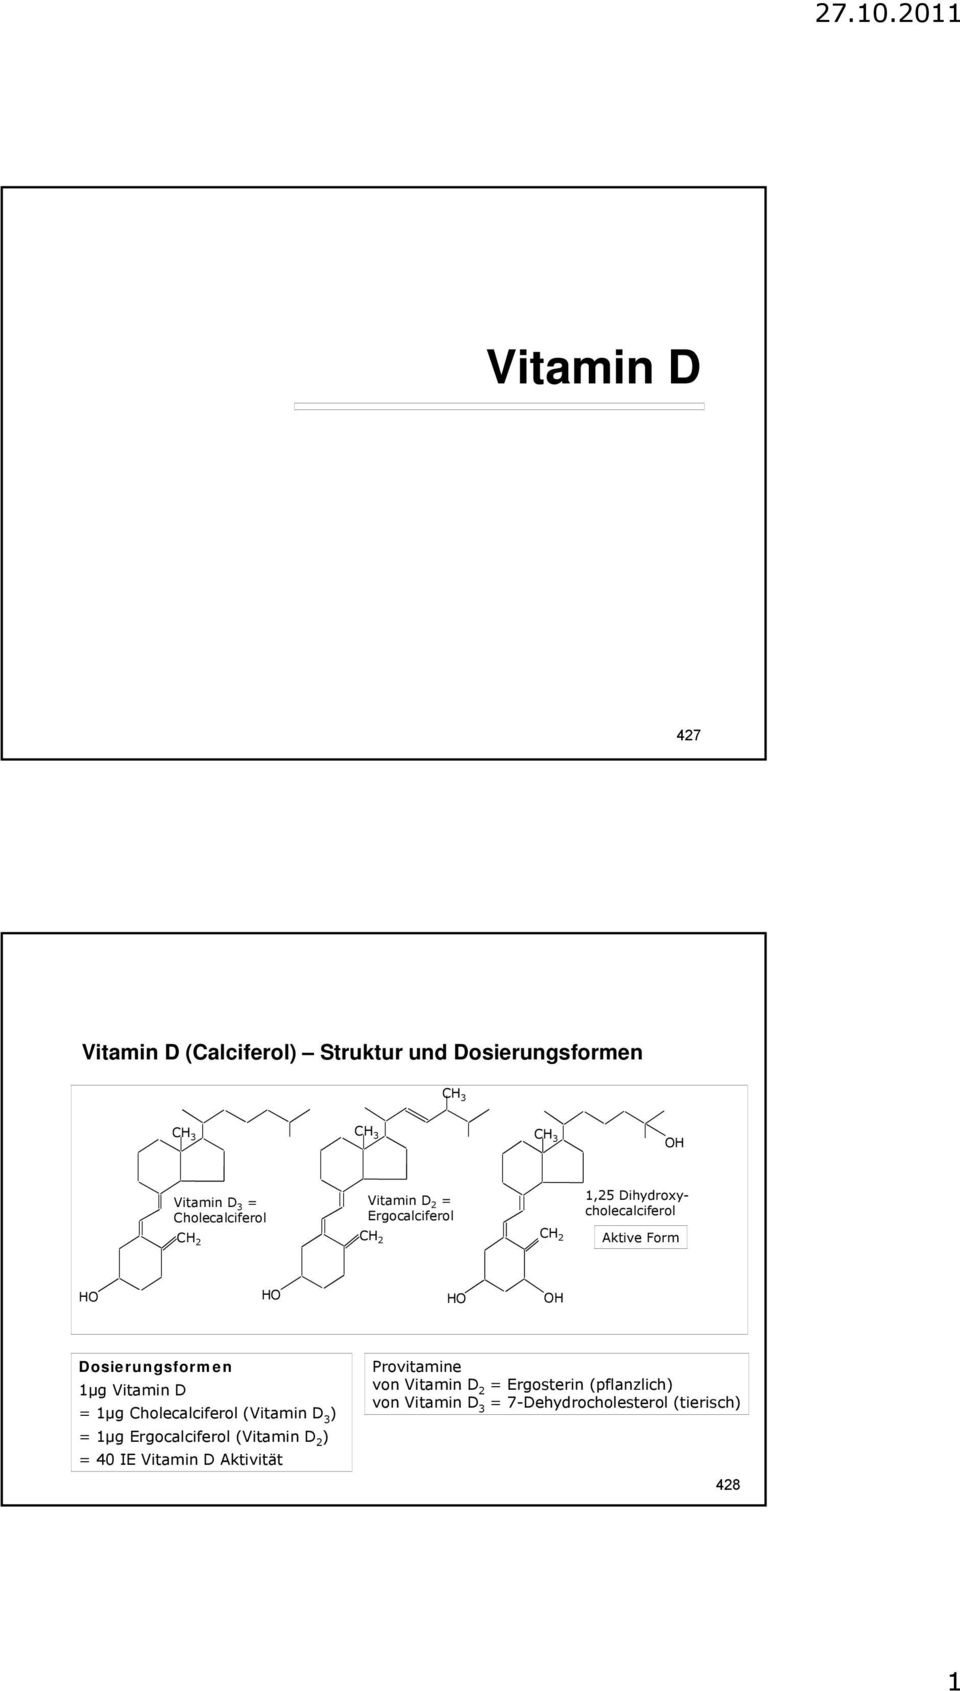 Vitamin D = 1µg Cholecalciferol (Vitamin D 3 ) = 1µg Ergocalciferol (Vitamin D 2 ) = 40 IE Vitamin D